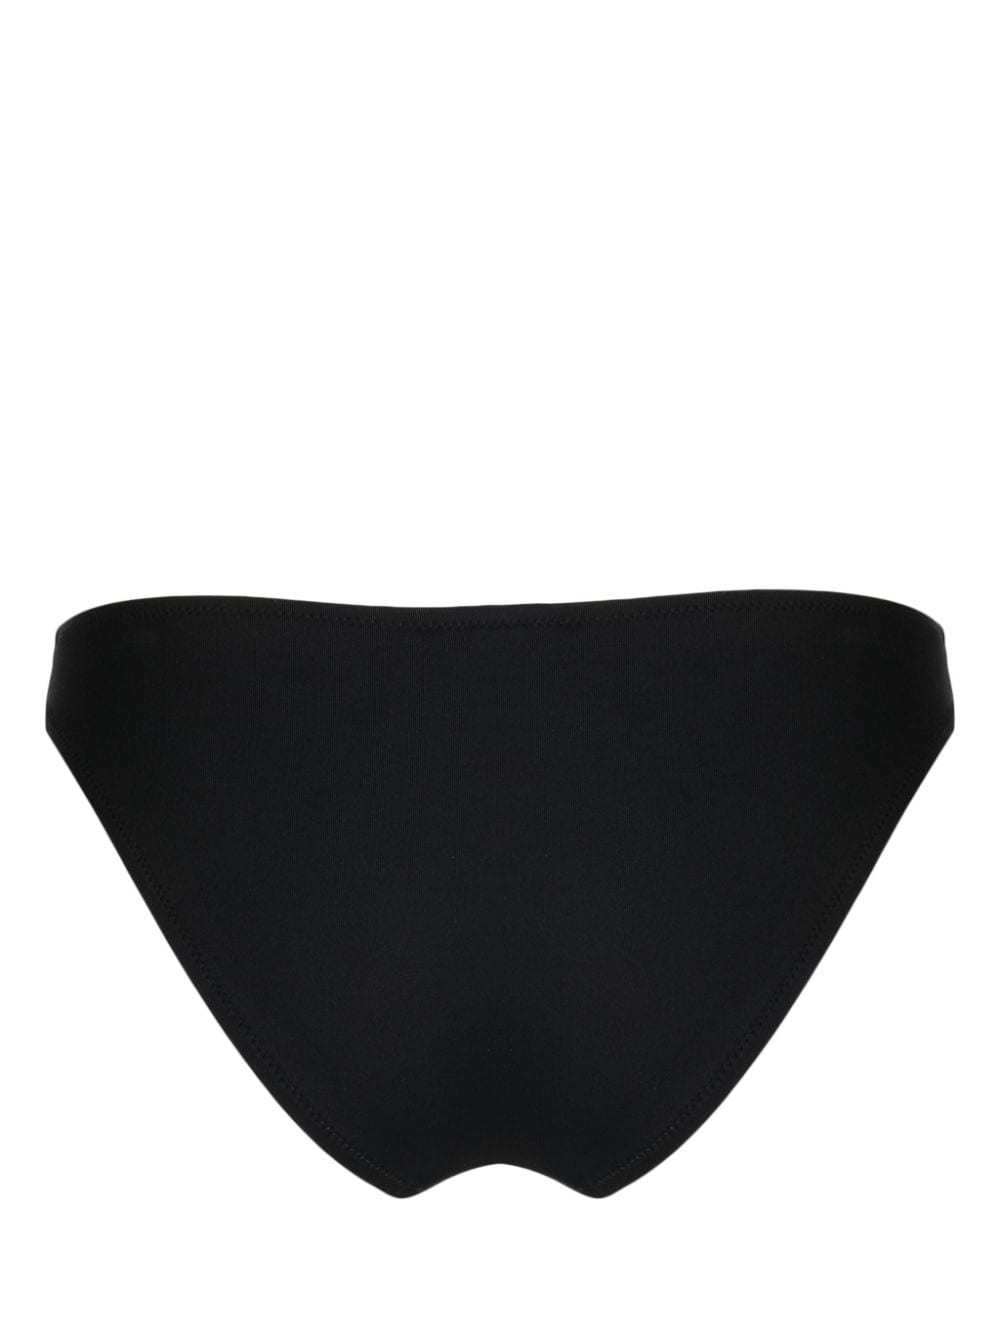 Melissa Odabash Barcelona bikinislip met elastische tailleband - Zwart